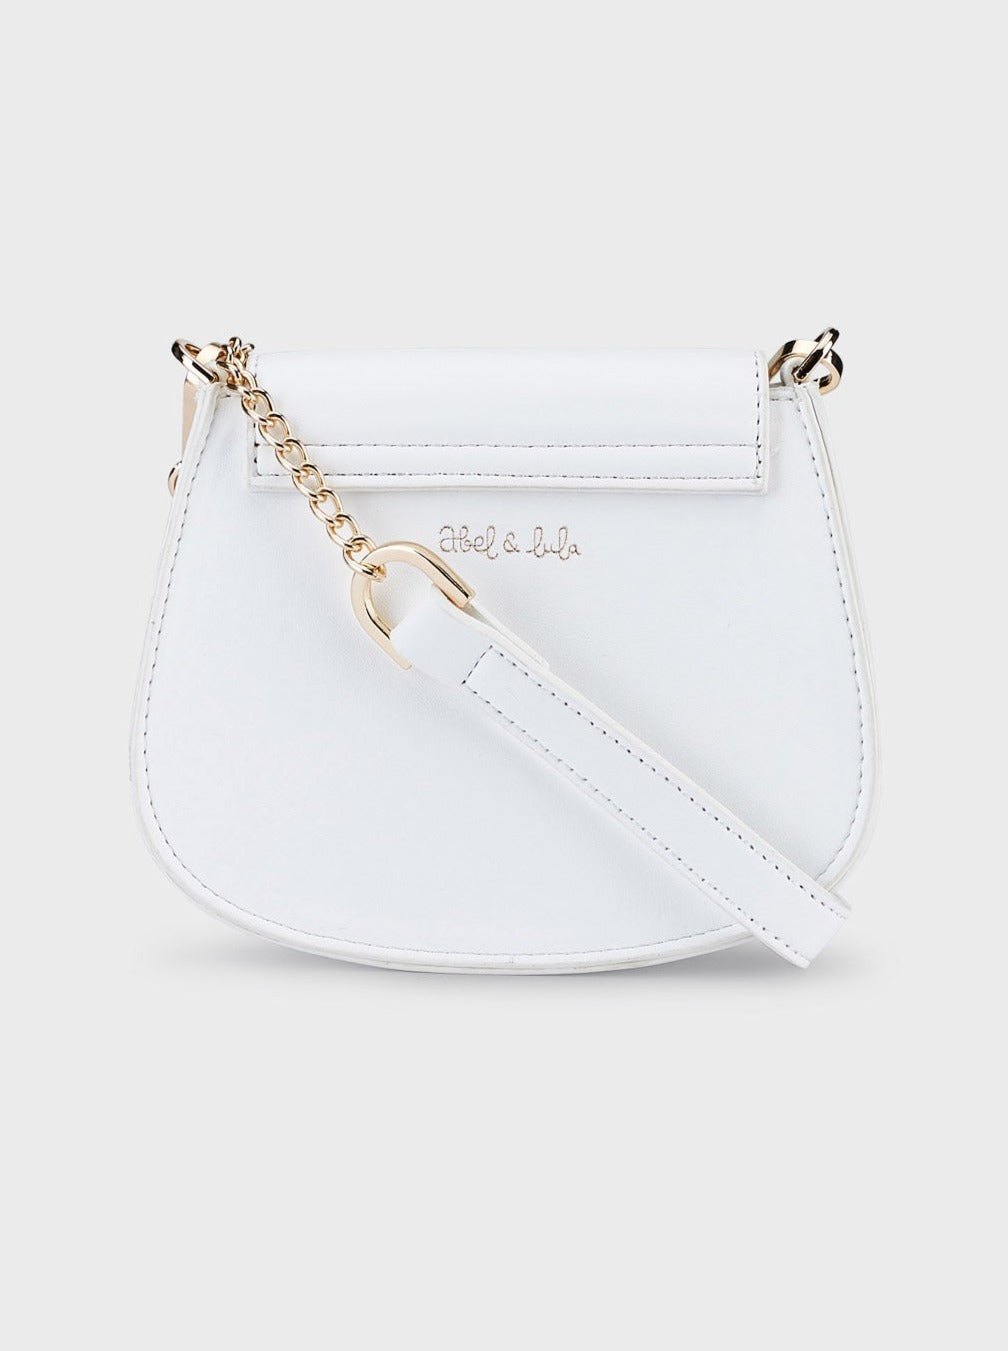 Abel & Lula Classic Handbag _White 5446-020